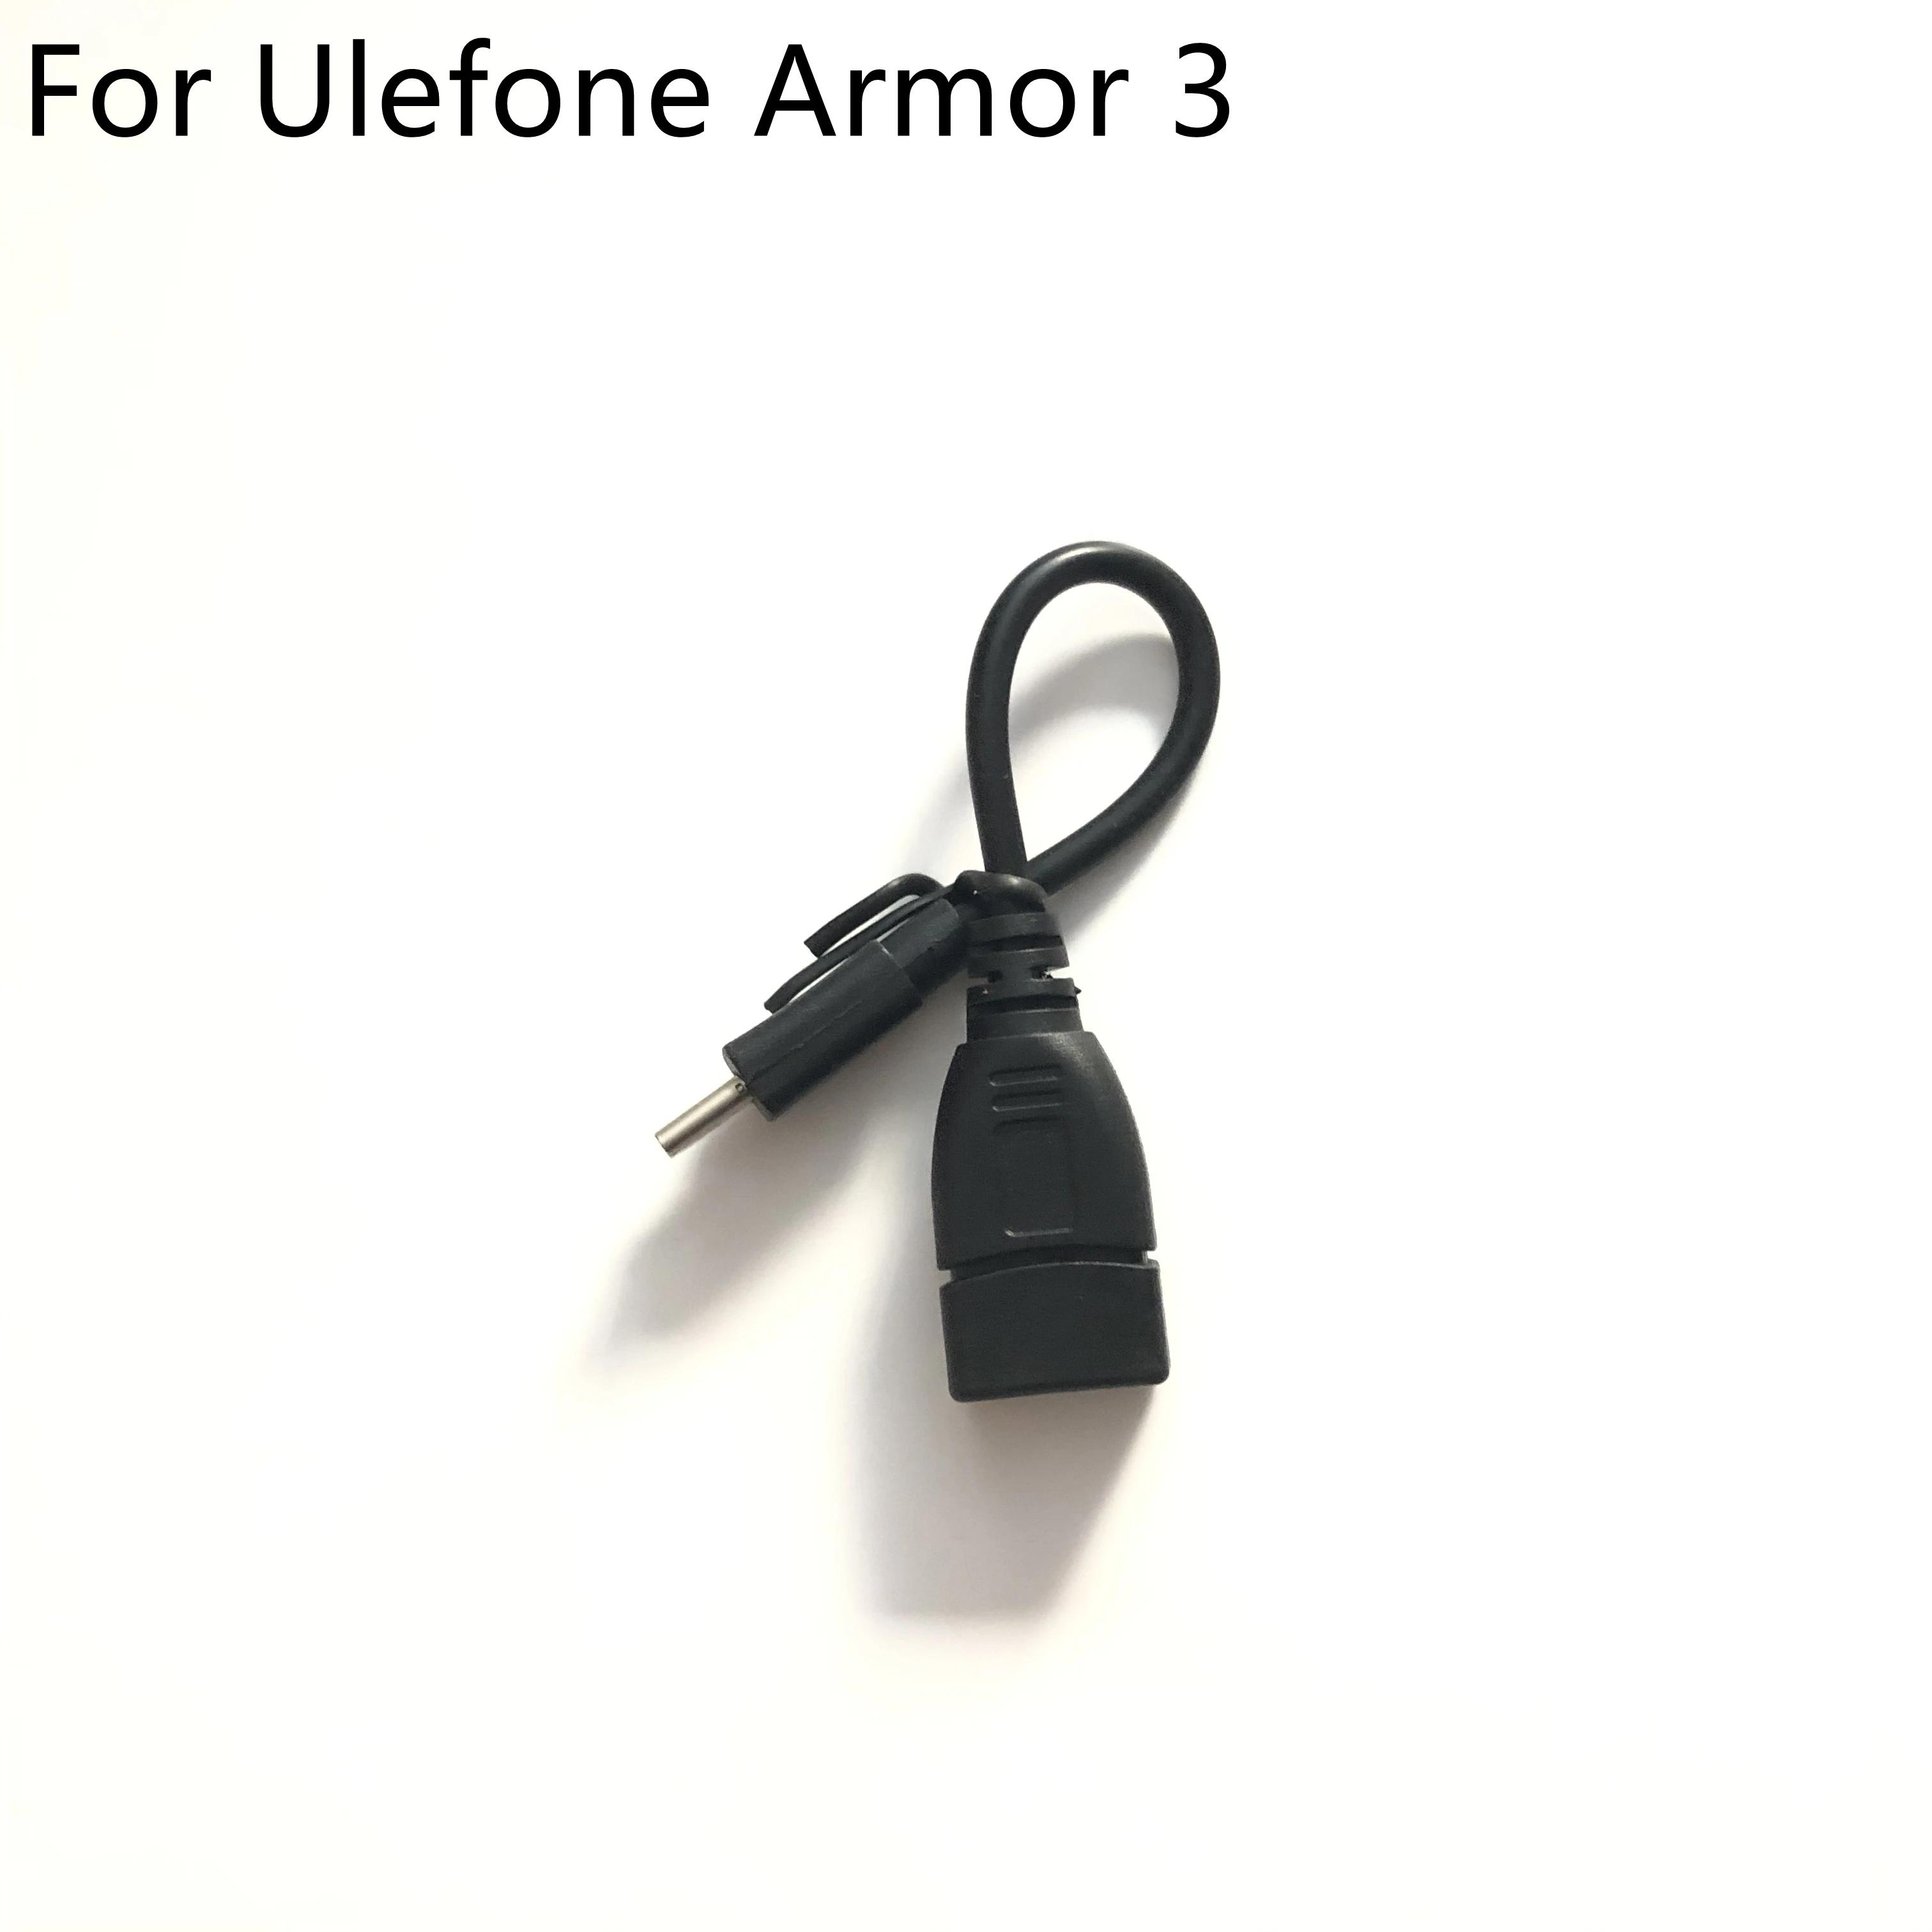 Ulefone armor 3 ulefone armor 3  ο otg ̺ otg  mt6763t octa-core 5.7 1080*2160 smartphone